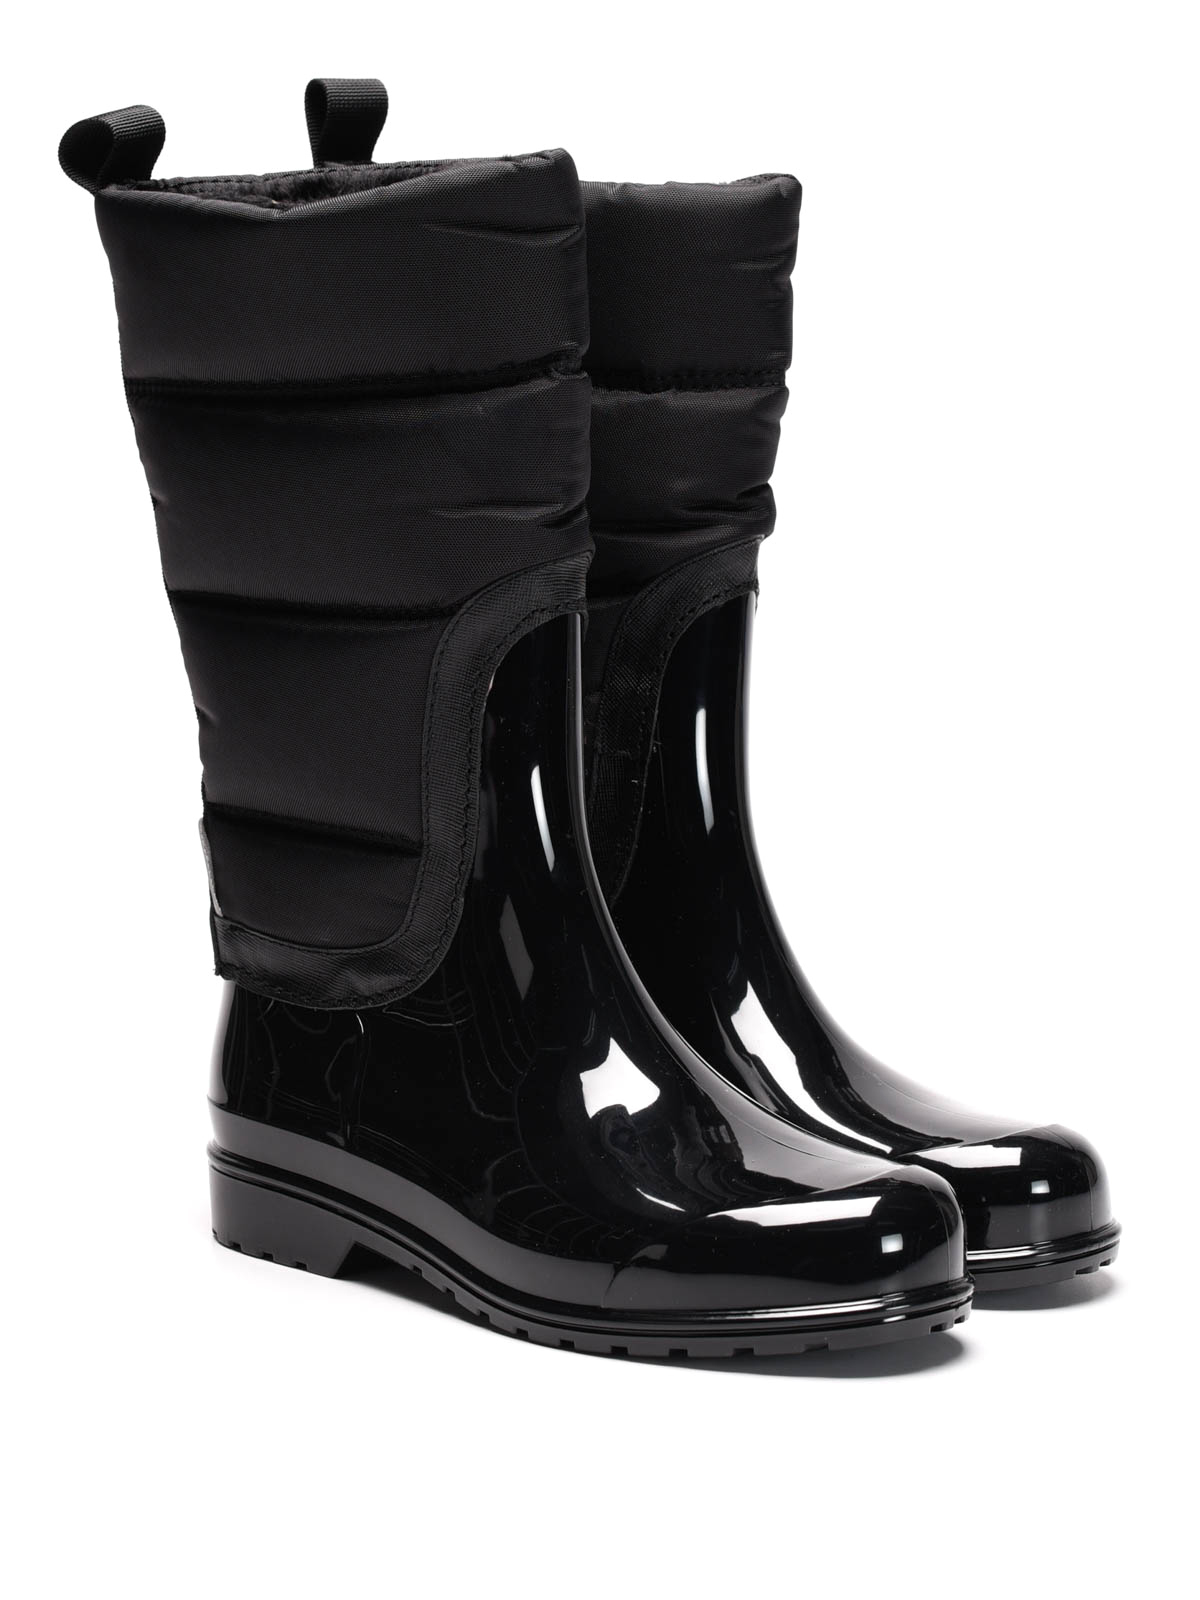 Aprender acerca 116+ imagen michael kors rain boots - Abzlocal.mx